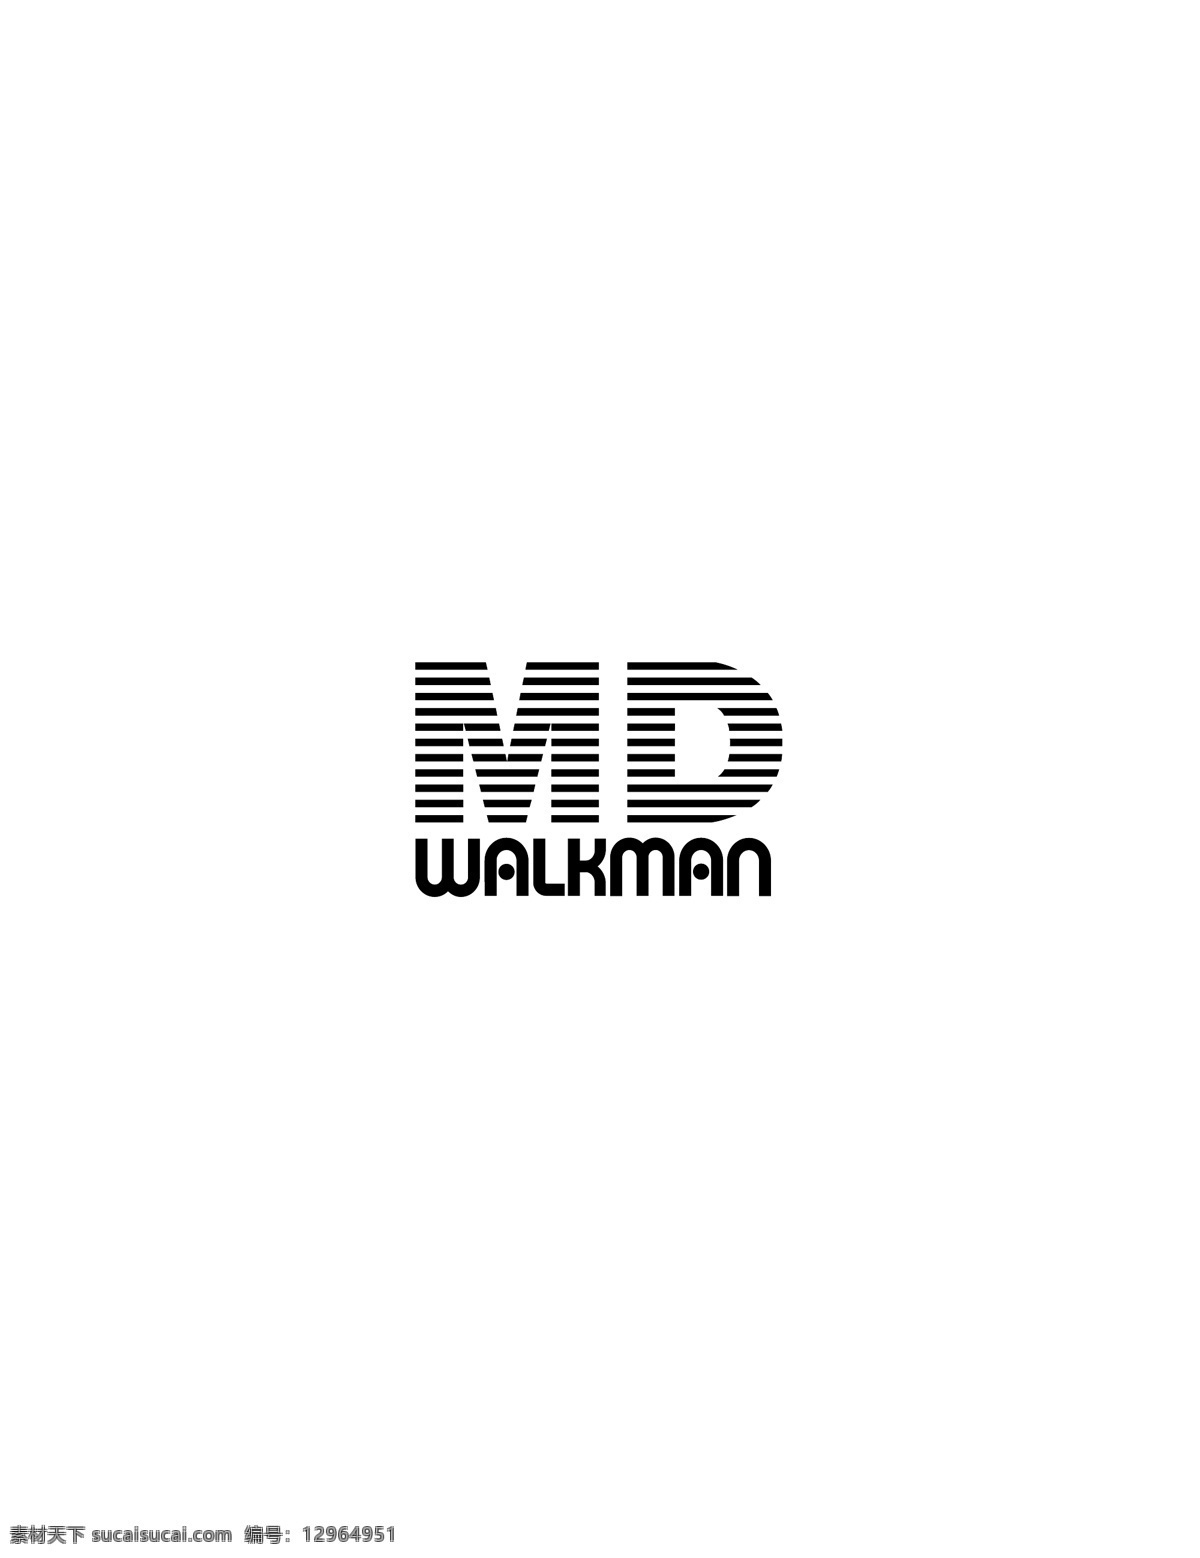 logo大全 logo 设计欣赏 md 商业矢量 矢量下载 walkman 传统 企业 标志设计 欣赏 网页矢量 矢量图 其他矢量图